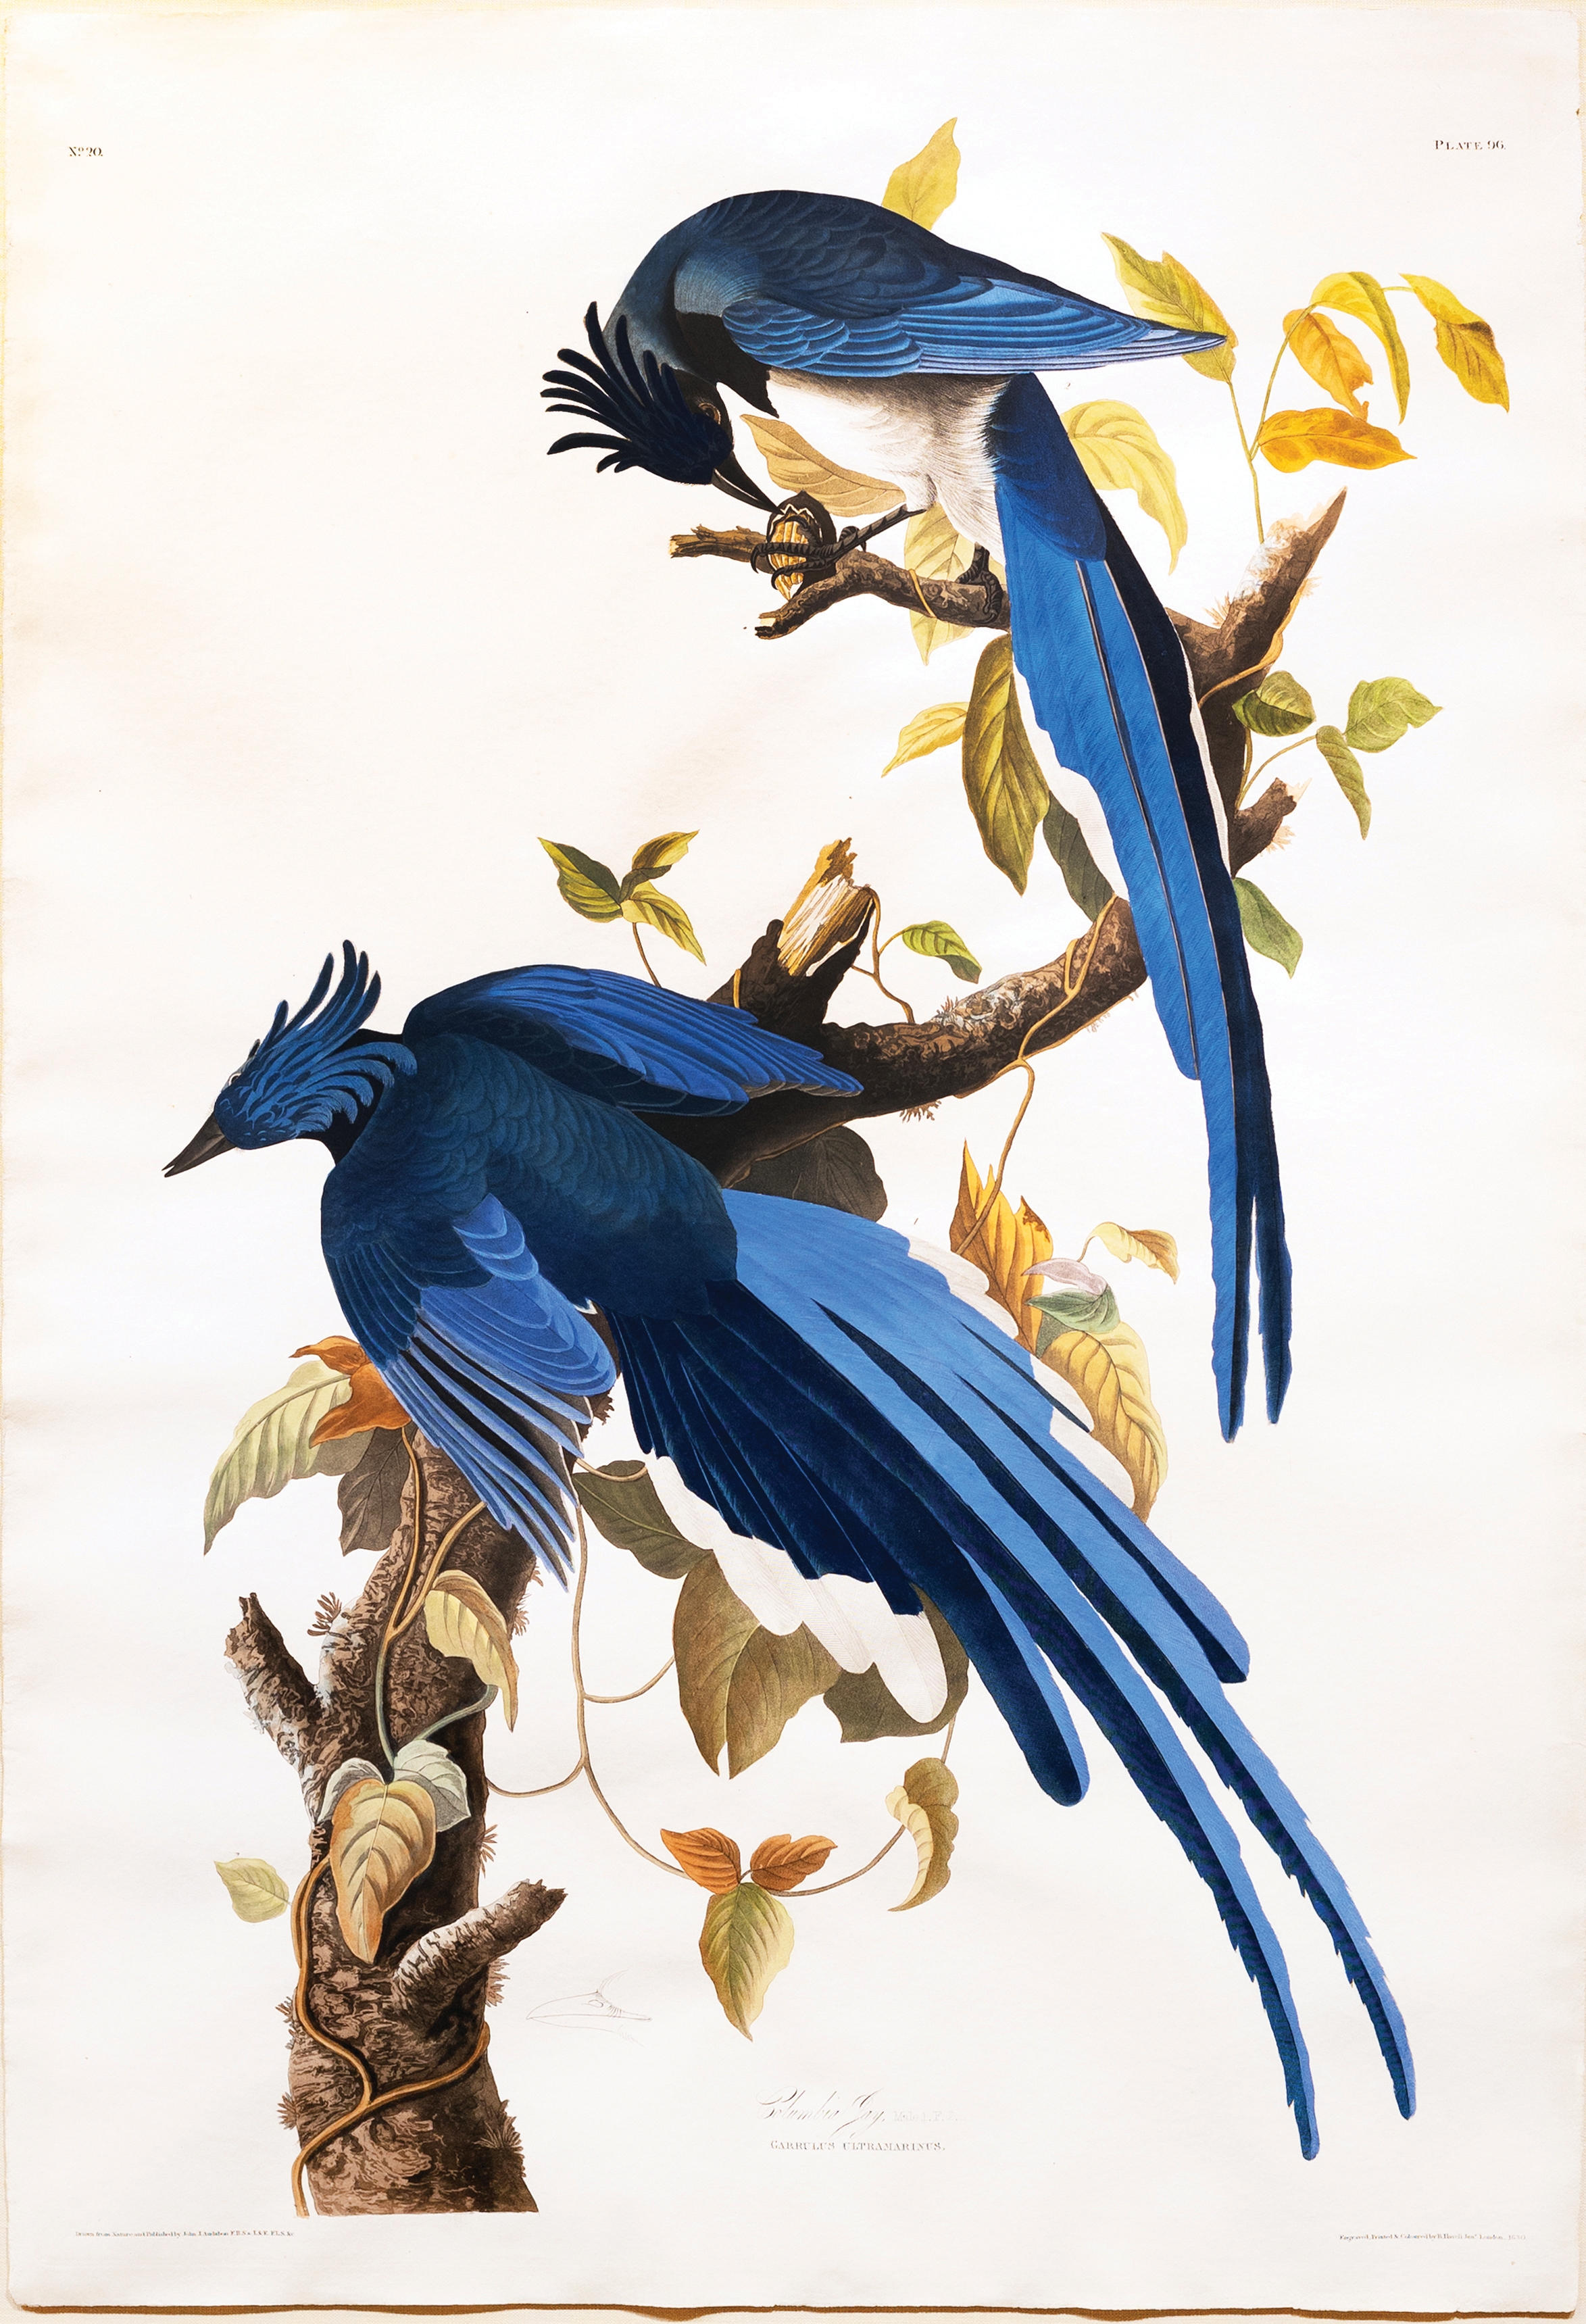 Artwork by John James Audubon, Audubon Aquatint, Columbia Jay, Made of Aquatint engraving